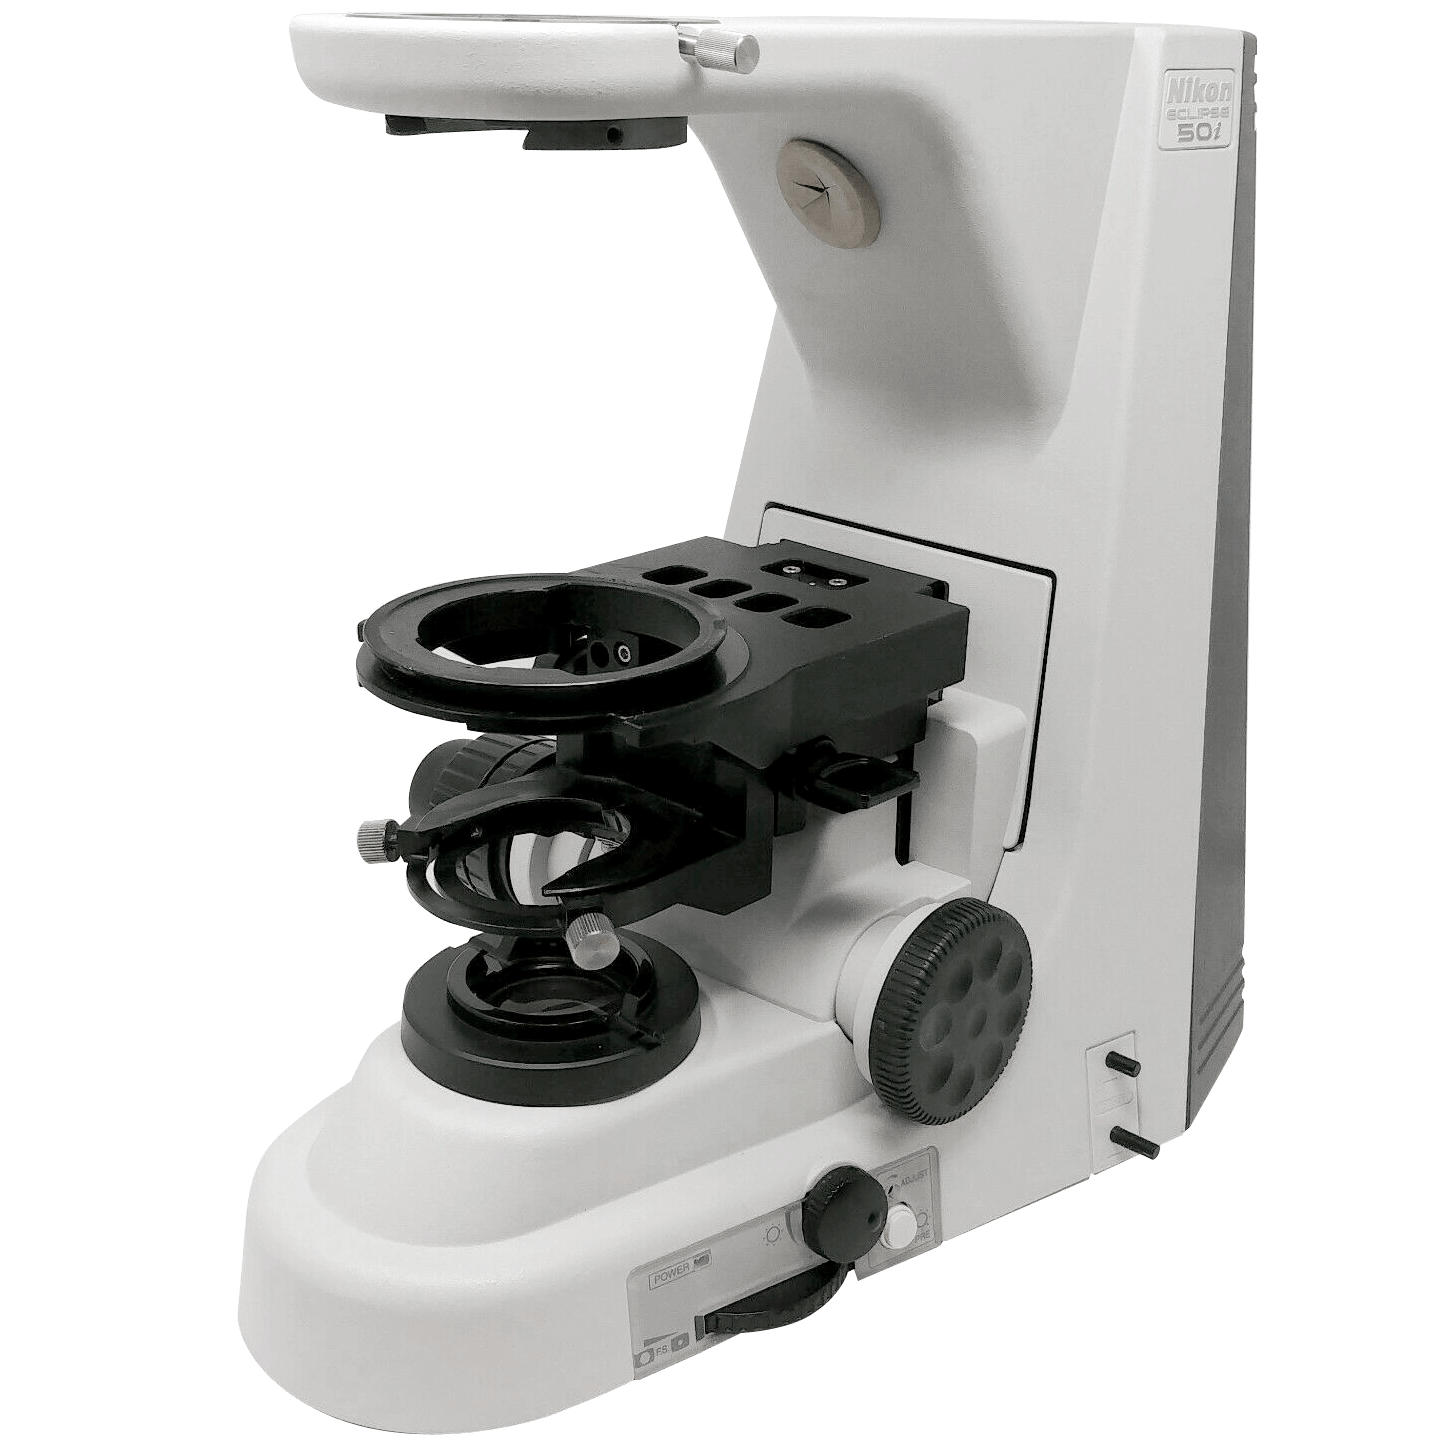 Nikon Штатив микроскопа Eclipse 50i 1